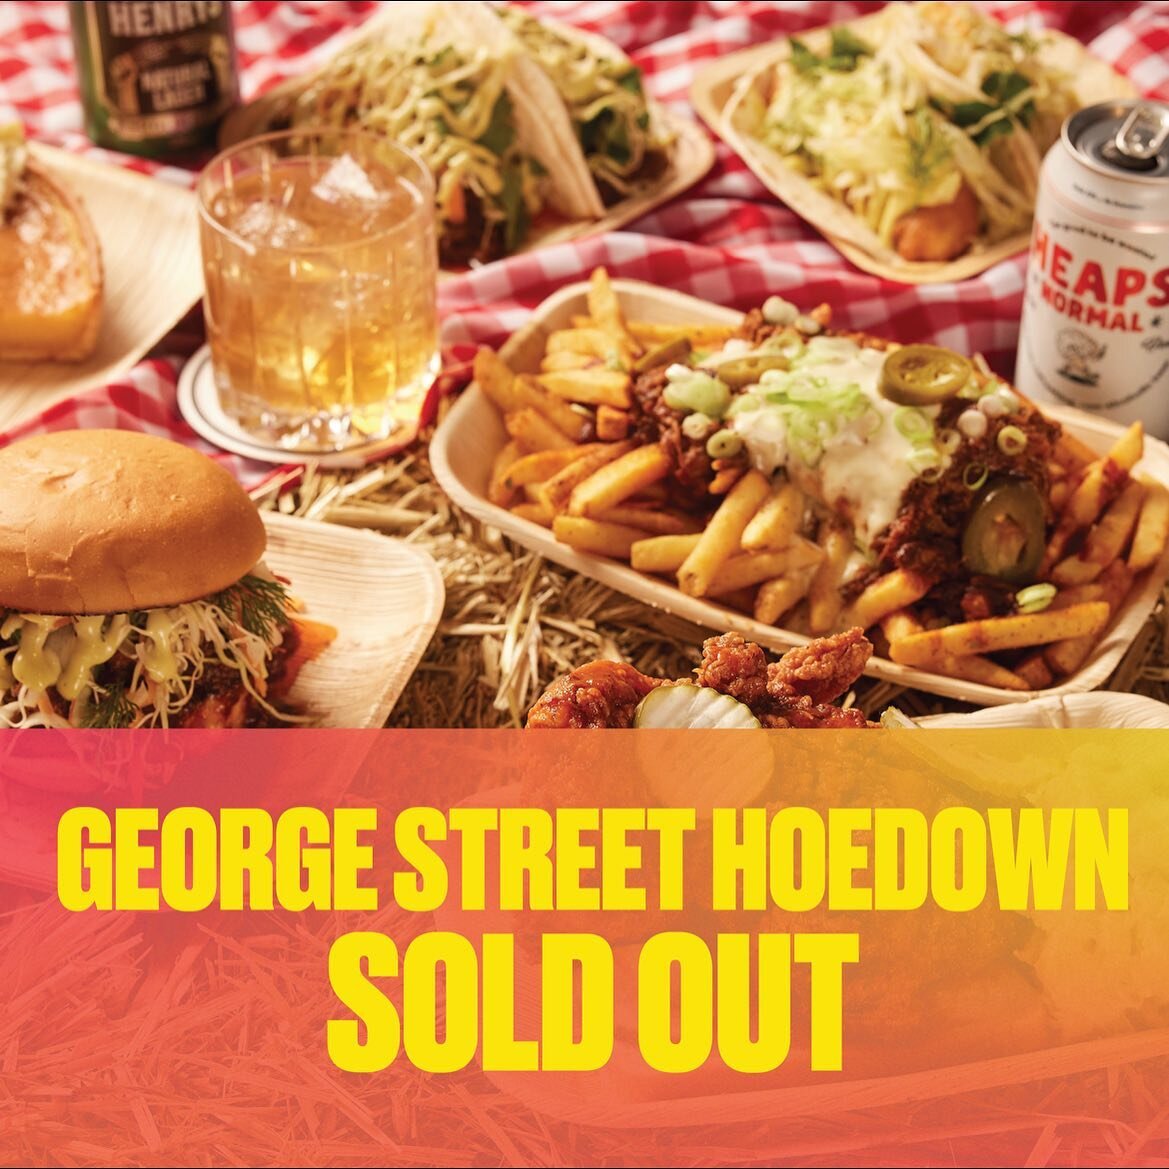 George Street Hoedown is NOW SOLD OUT! The countdown is on for 12pm!

#summerinsydney #openforlunch22 #feelnewsydney #sydney #letsdolunch #longlunch #georgestreet #parramatta #sydneyfoodscene @sydney